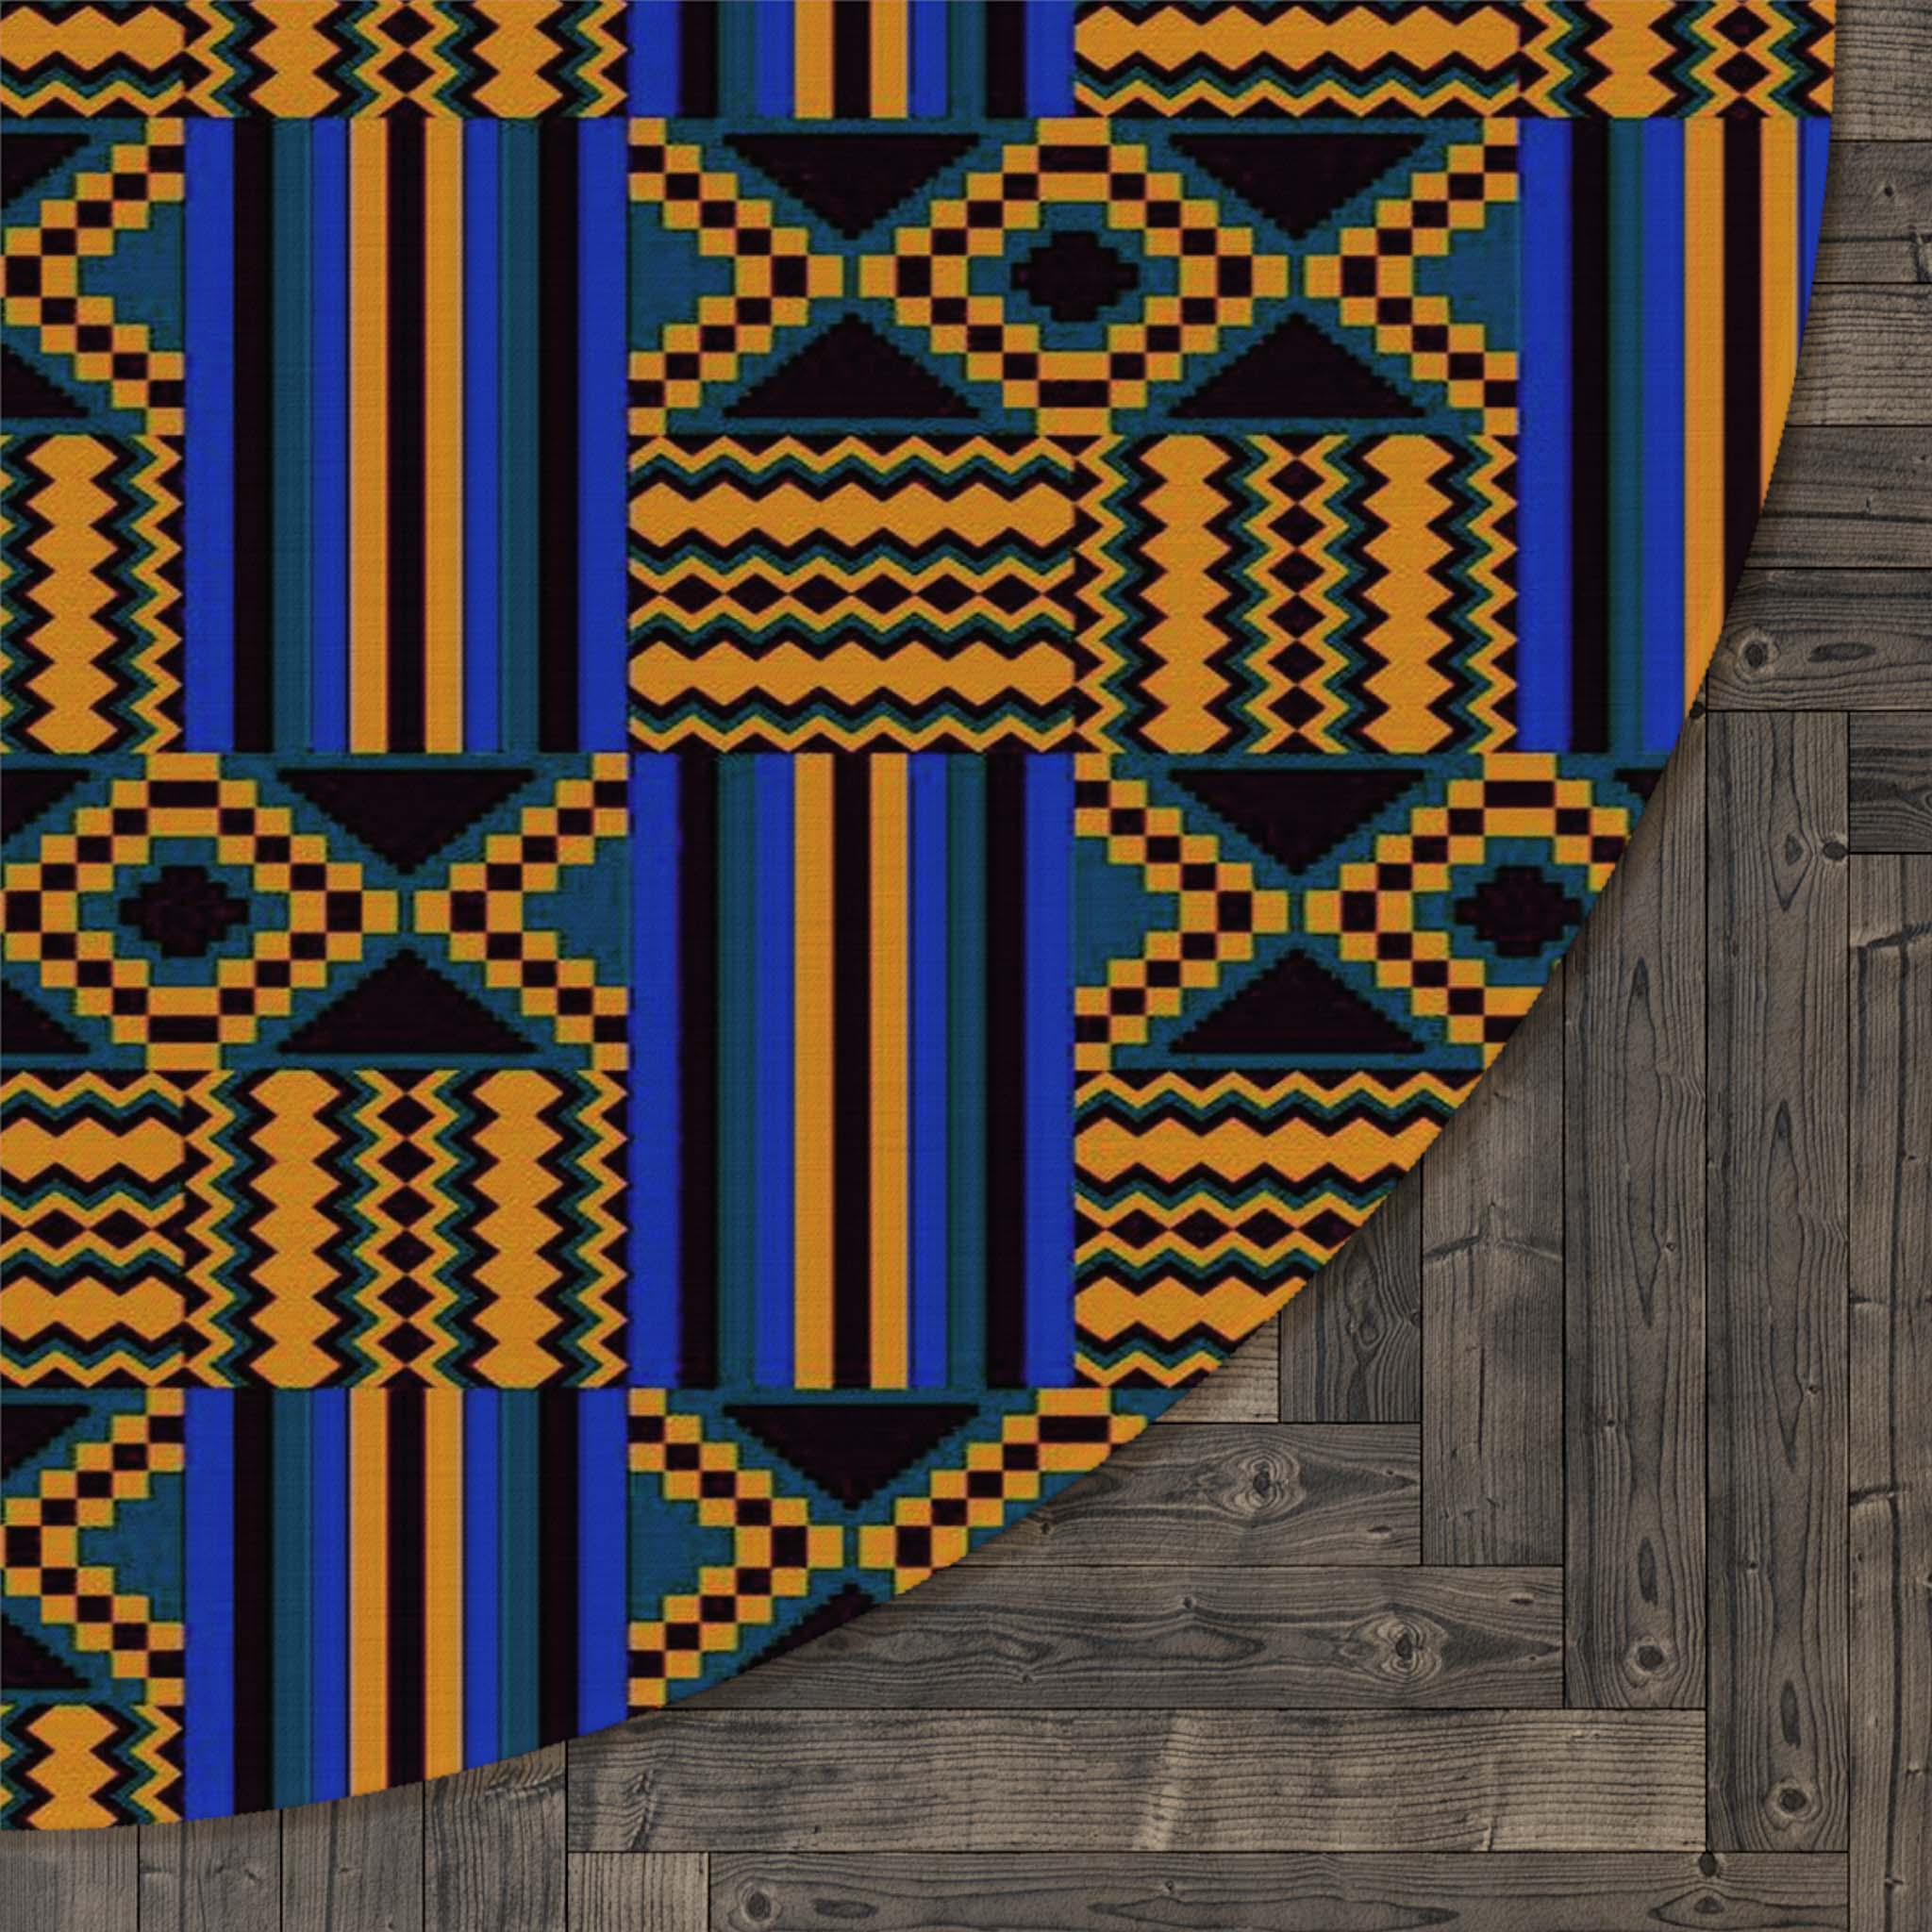 Round African Rug Tribal Print Carpet - Bynelo